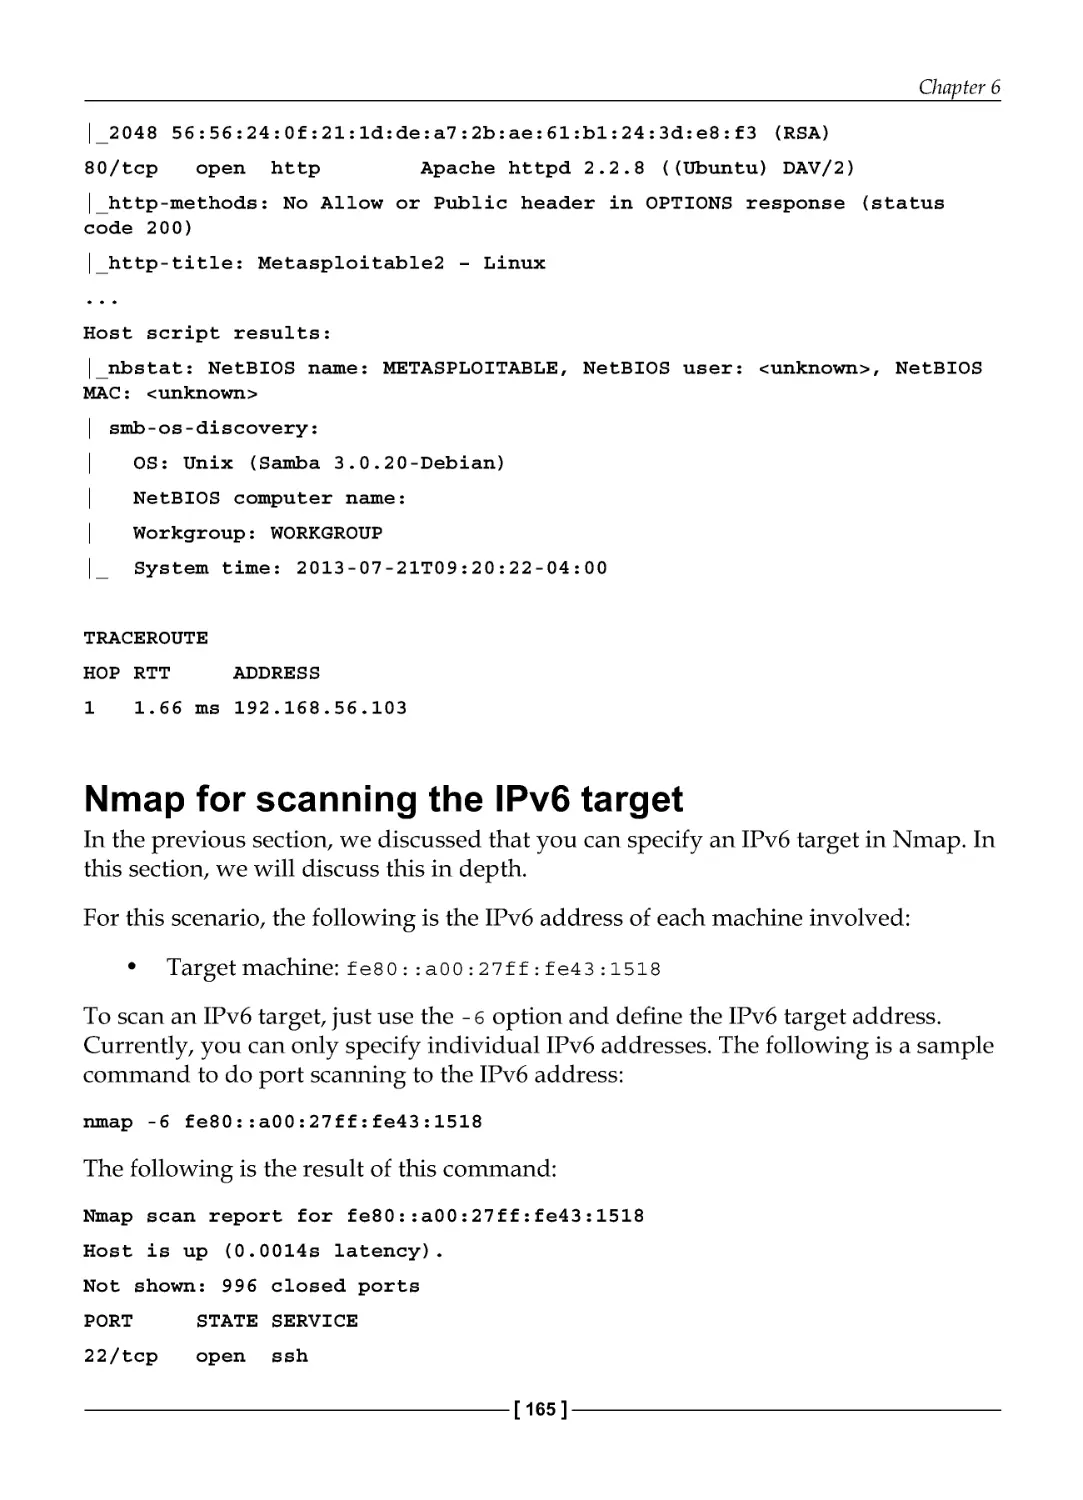 Nmap for scanning the IPv6 target